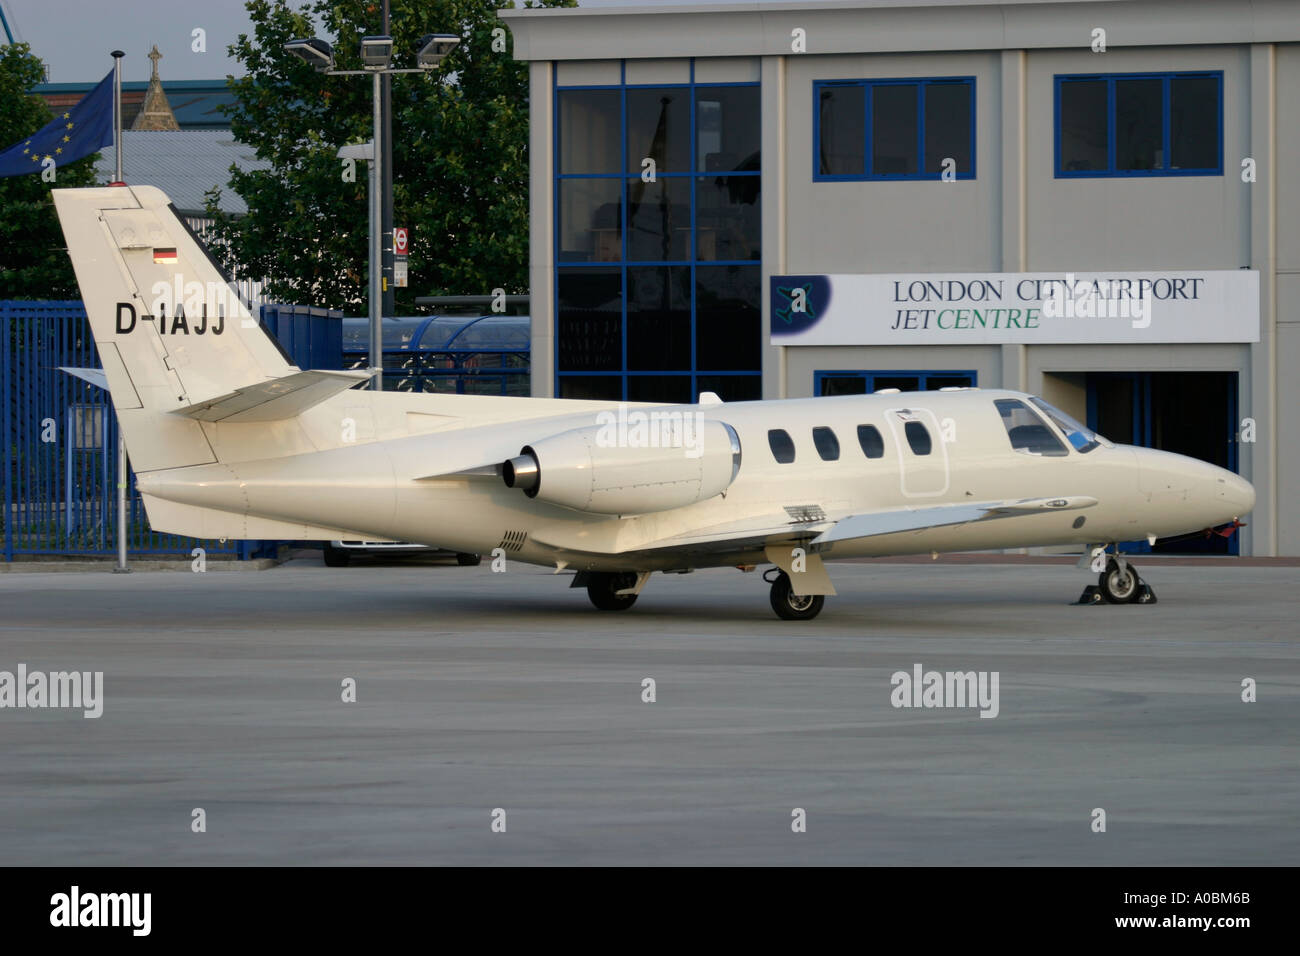 Business Jet parked outside London City Airport JetCentre UK Stock Photo